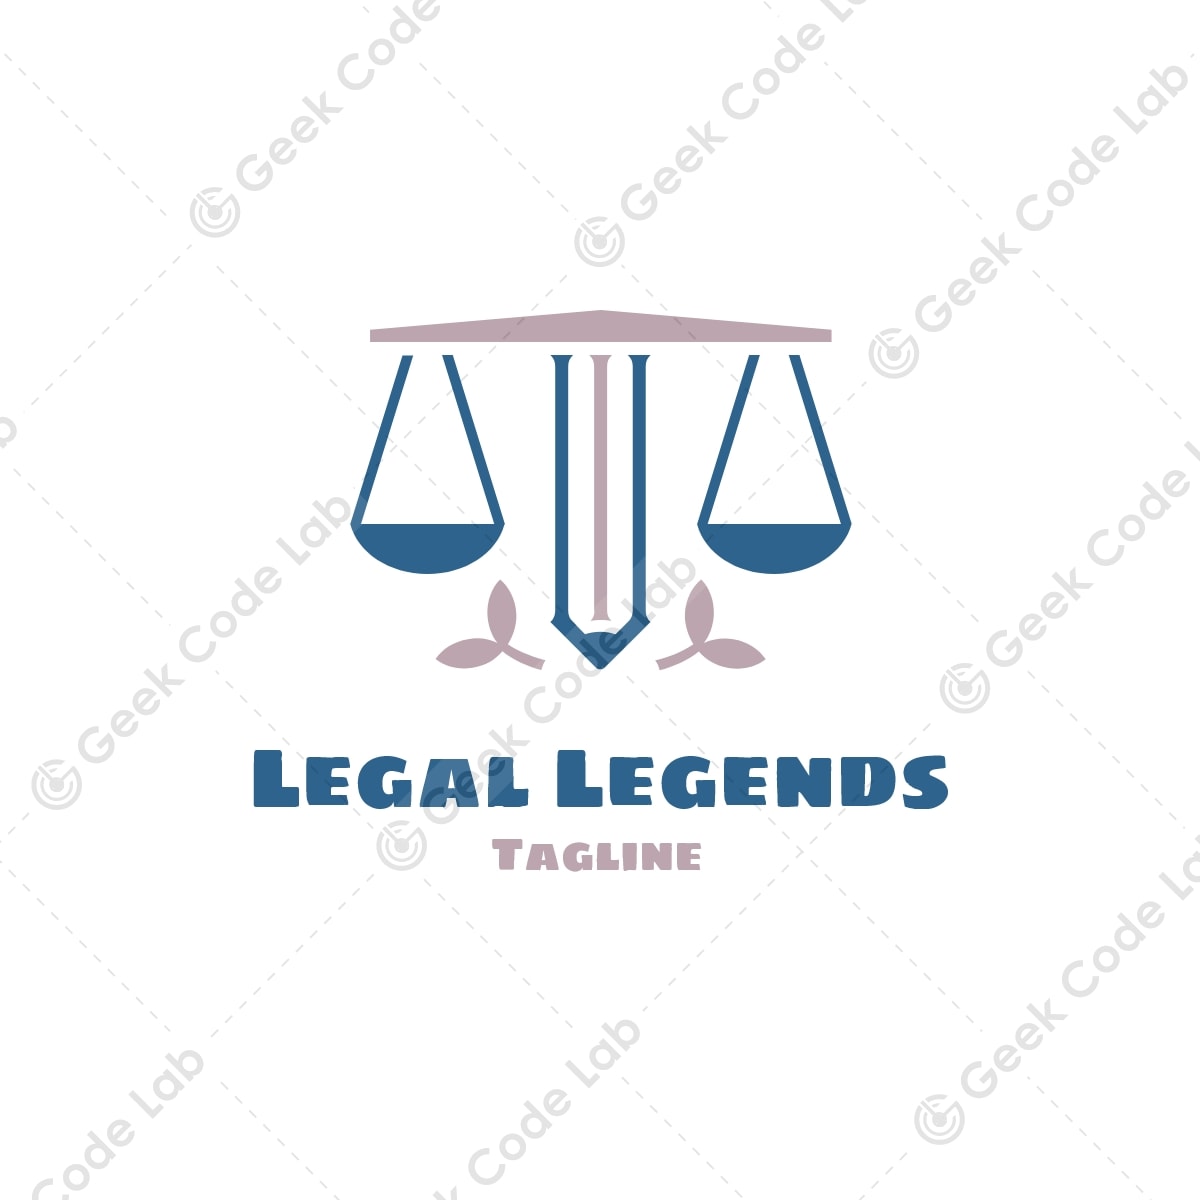 Legal Legends